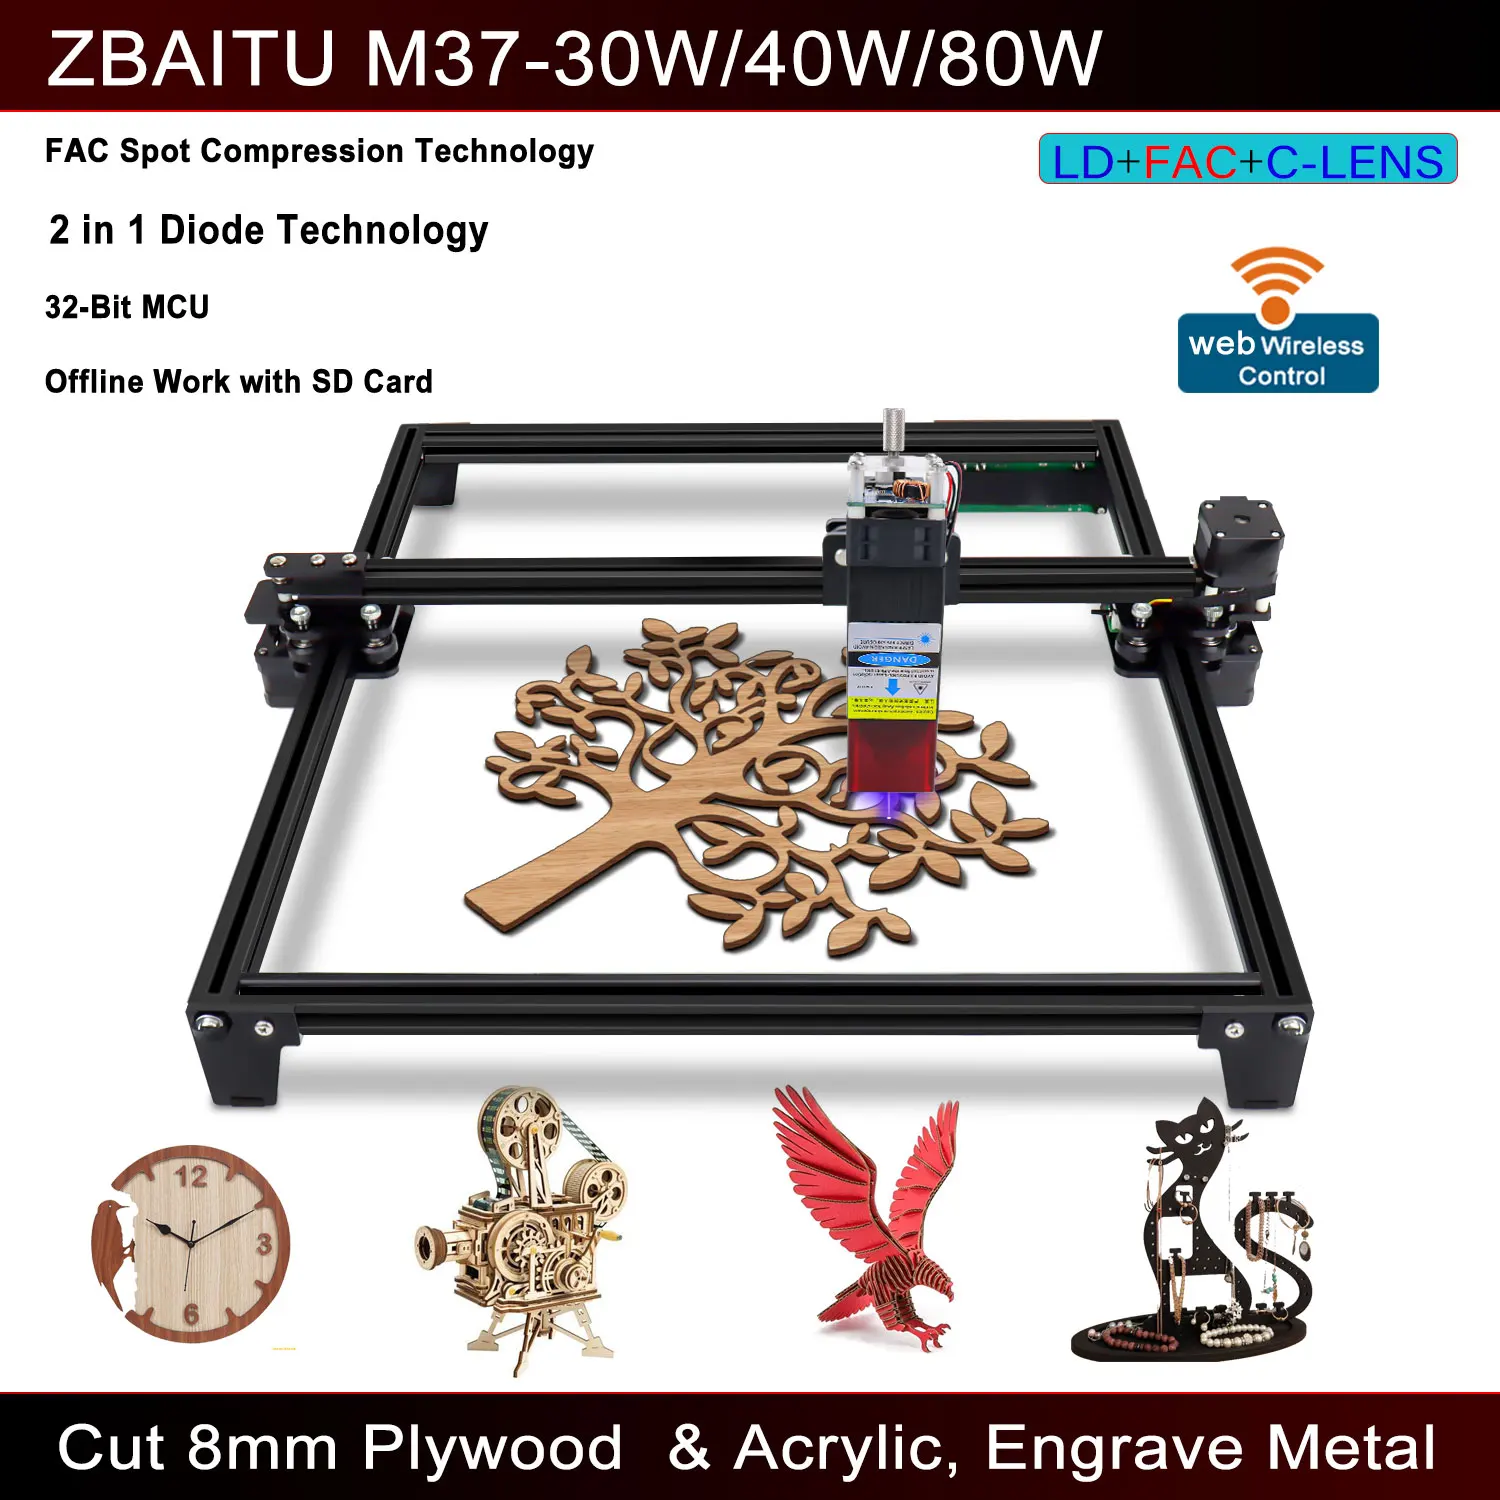 

ZBAITU Laser 30/40/80W Engraving Cutting Machine -32 bit CNC Carving Cutter Laser Engraver Cut 10mm Wood FAC Offline